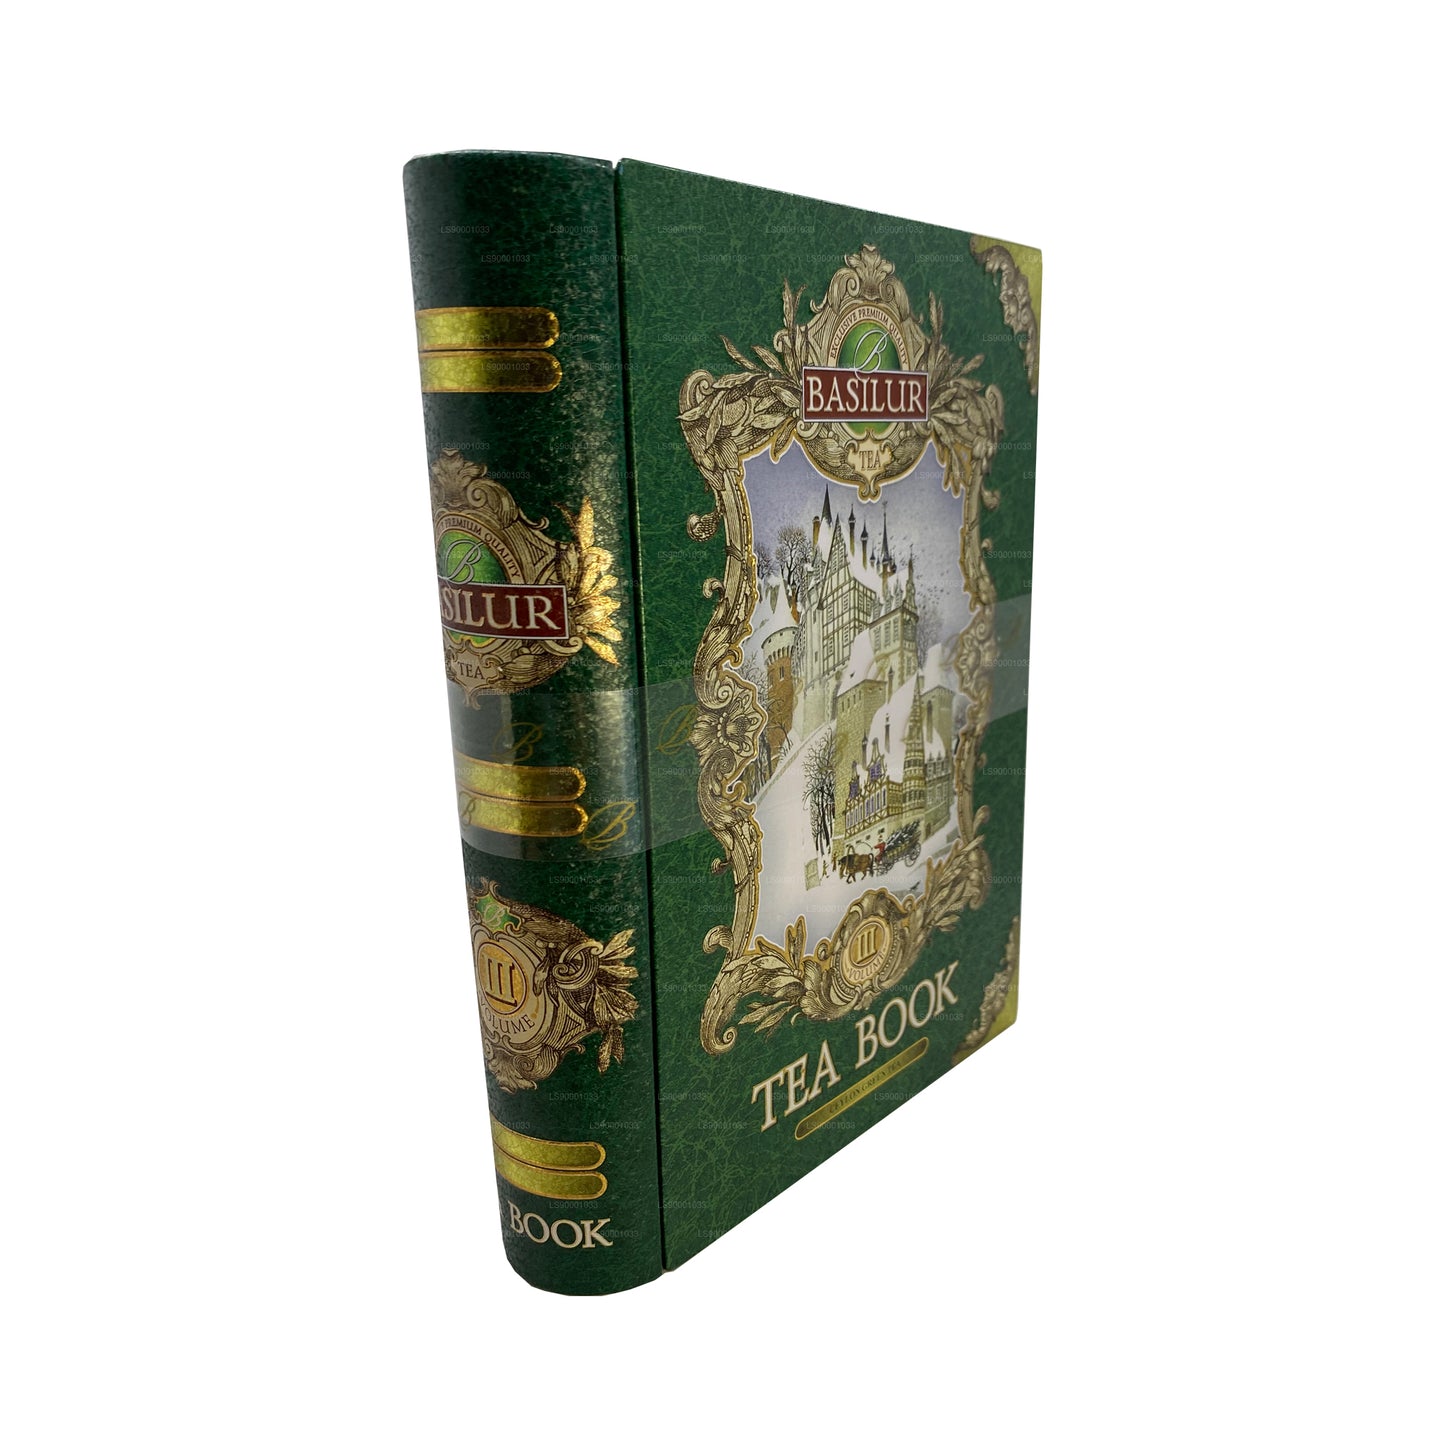 Basilur Tea Book Volume III Green (100g)